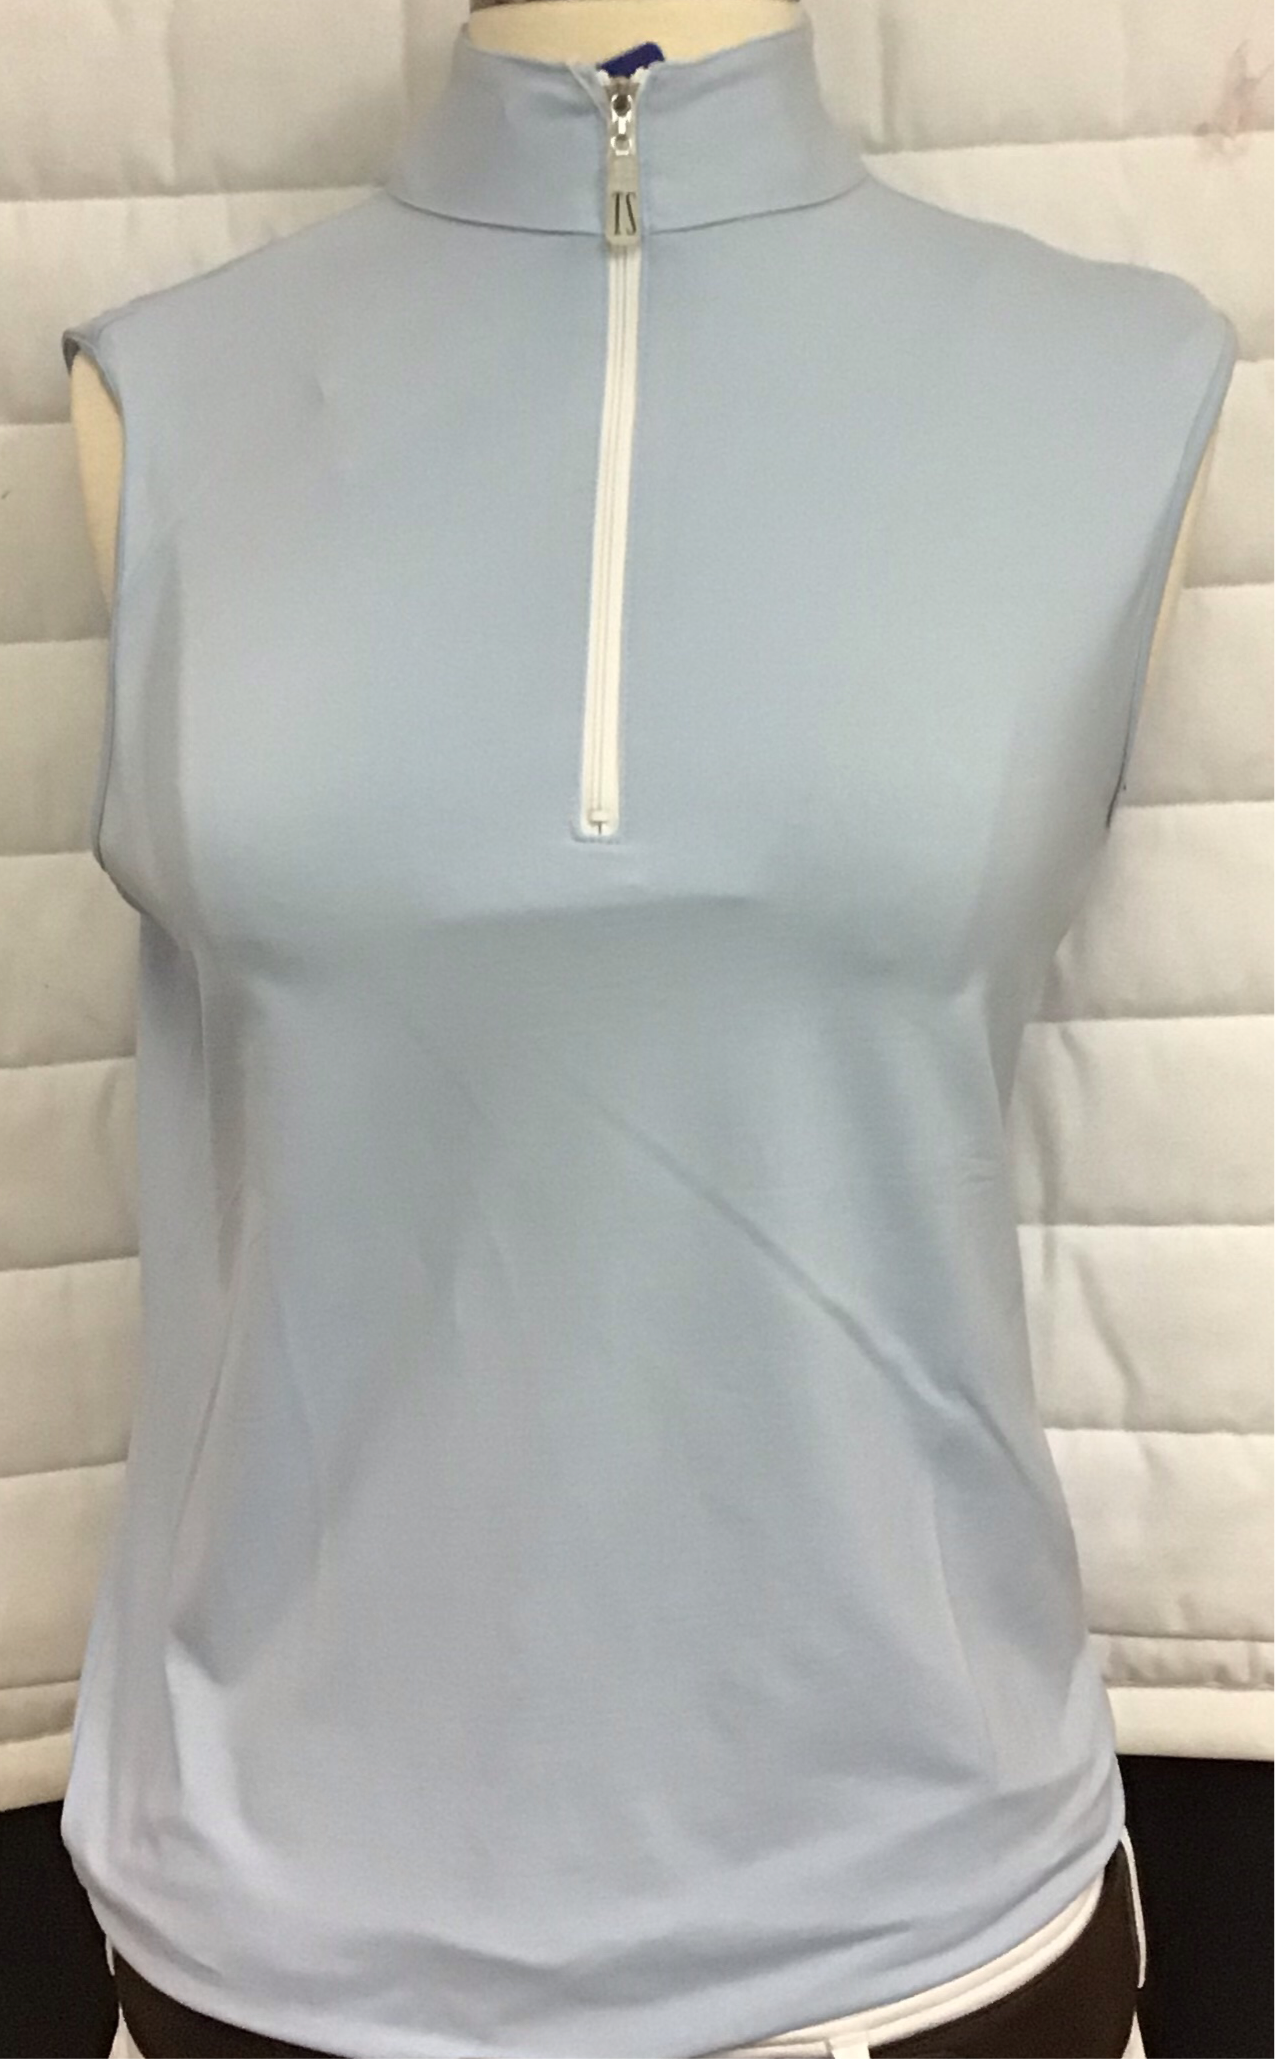 Tailored Sportsman Women's Sleeveless IceFil Shirt